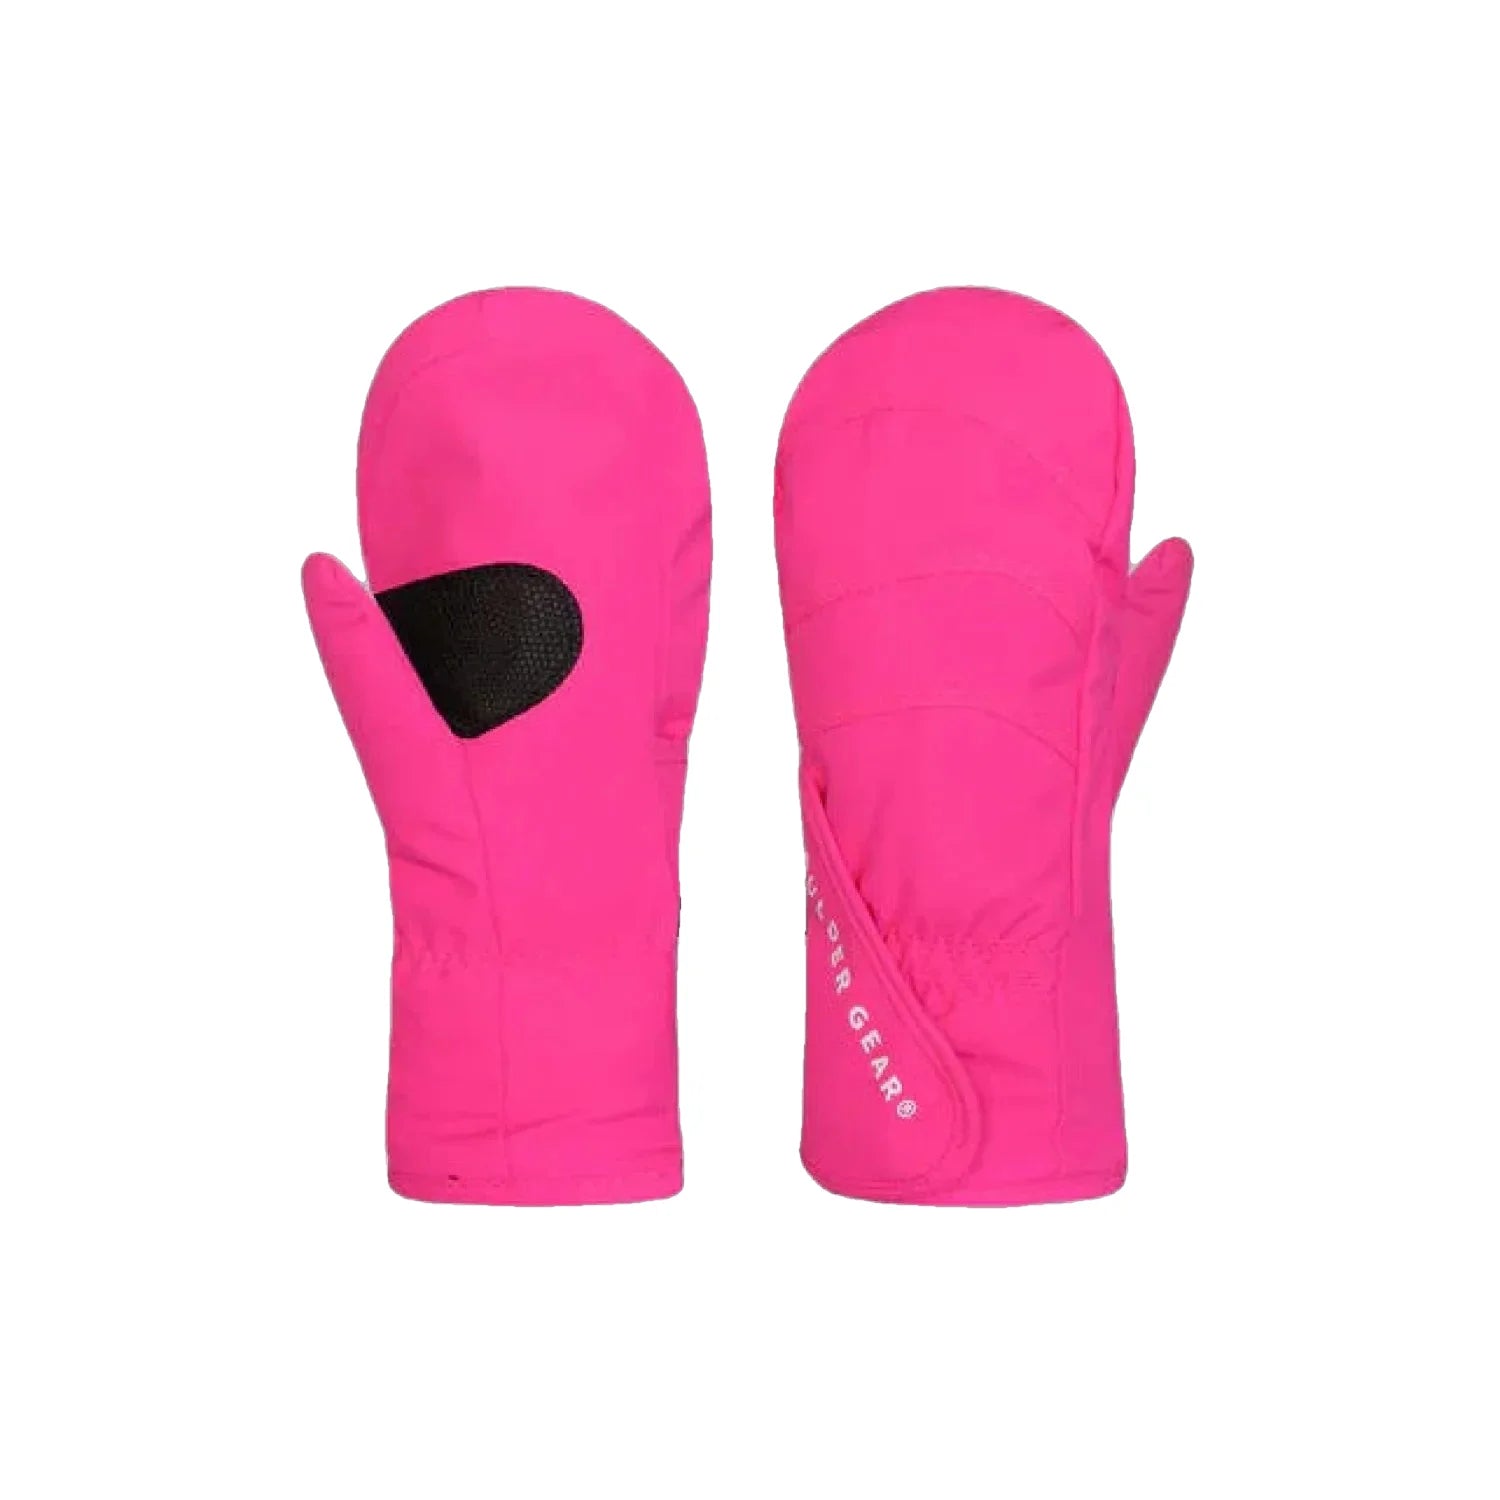 Boulder Gear's Flurry Mittens in Pink Glo.